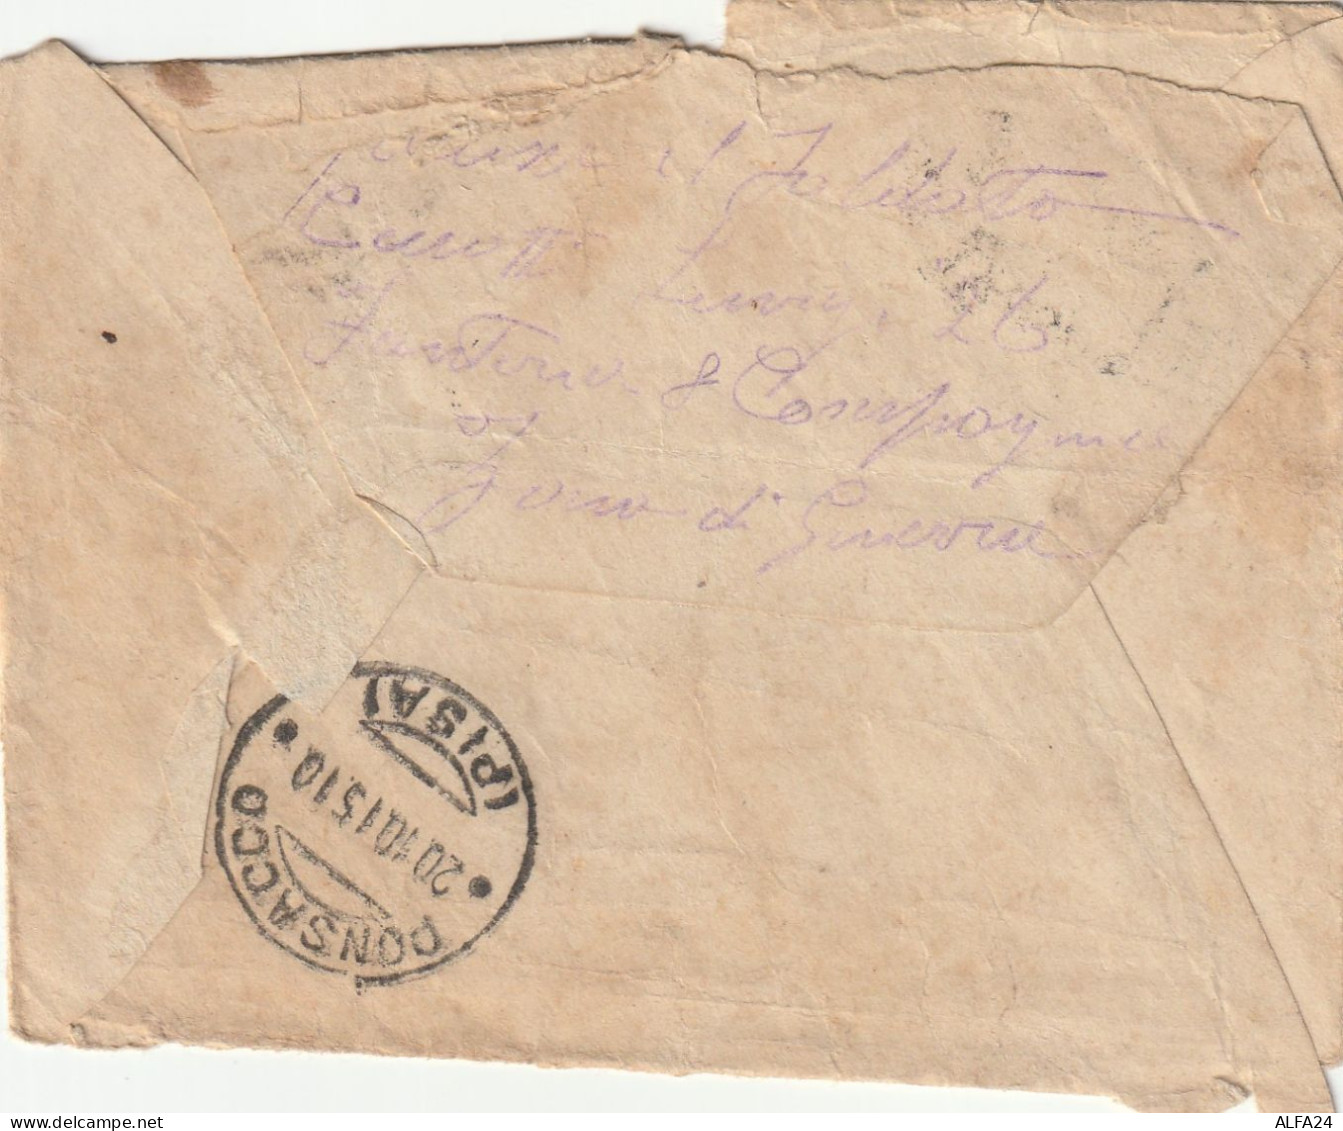 LETTERA 1915 SEGNATASSE 5+10 POSTA MILITARE VII DIVISIONE TIMBRO ARRIVO PONSACCO PISA (ZP3302 - Strafport